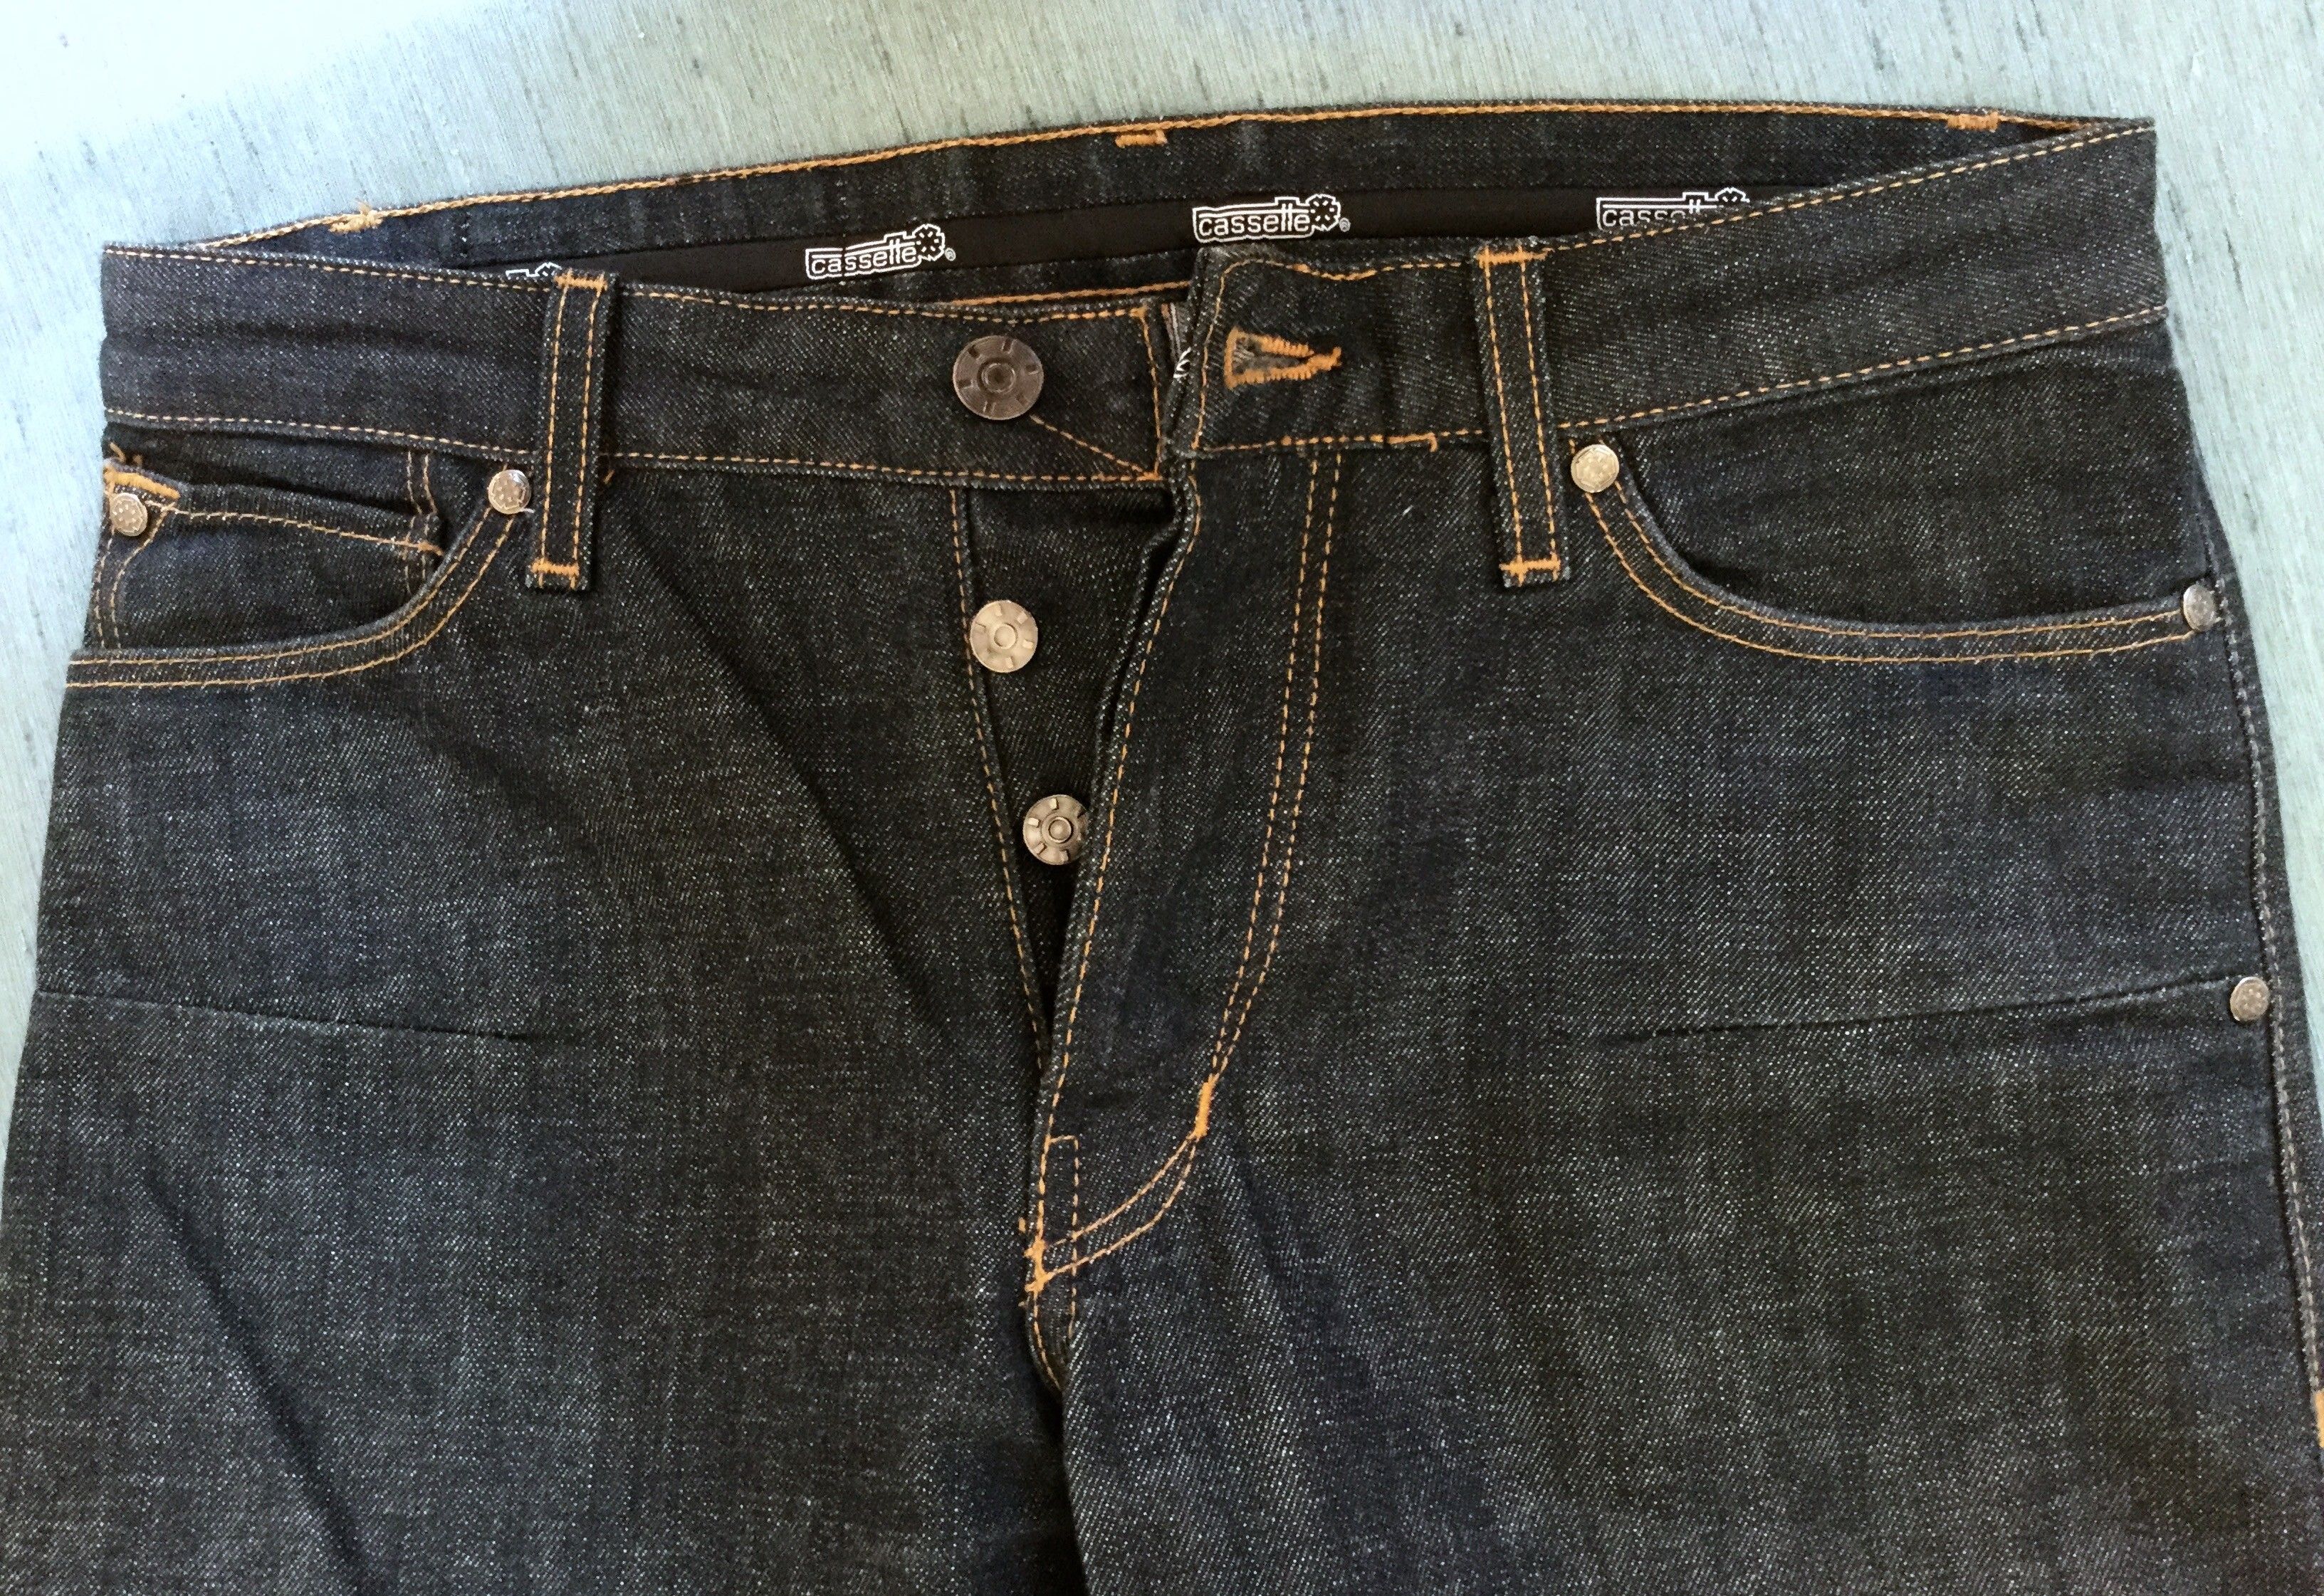 Cassette Deep Indigo Selvedge Denim Jeans 30 x 36 | Grailed